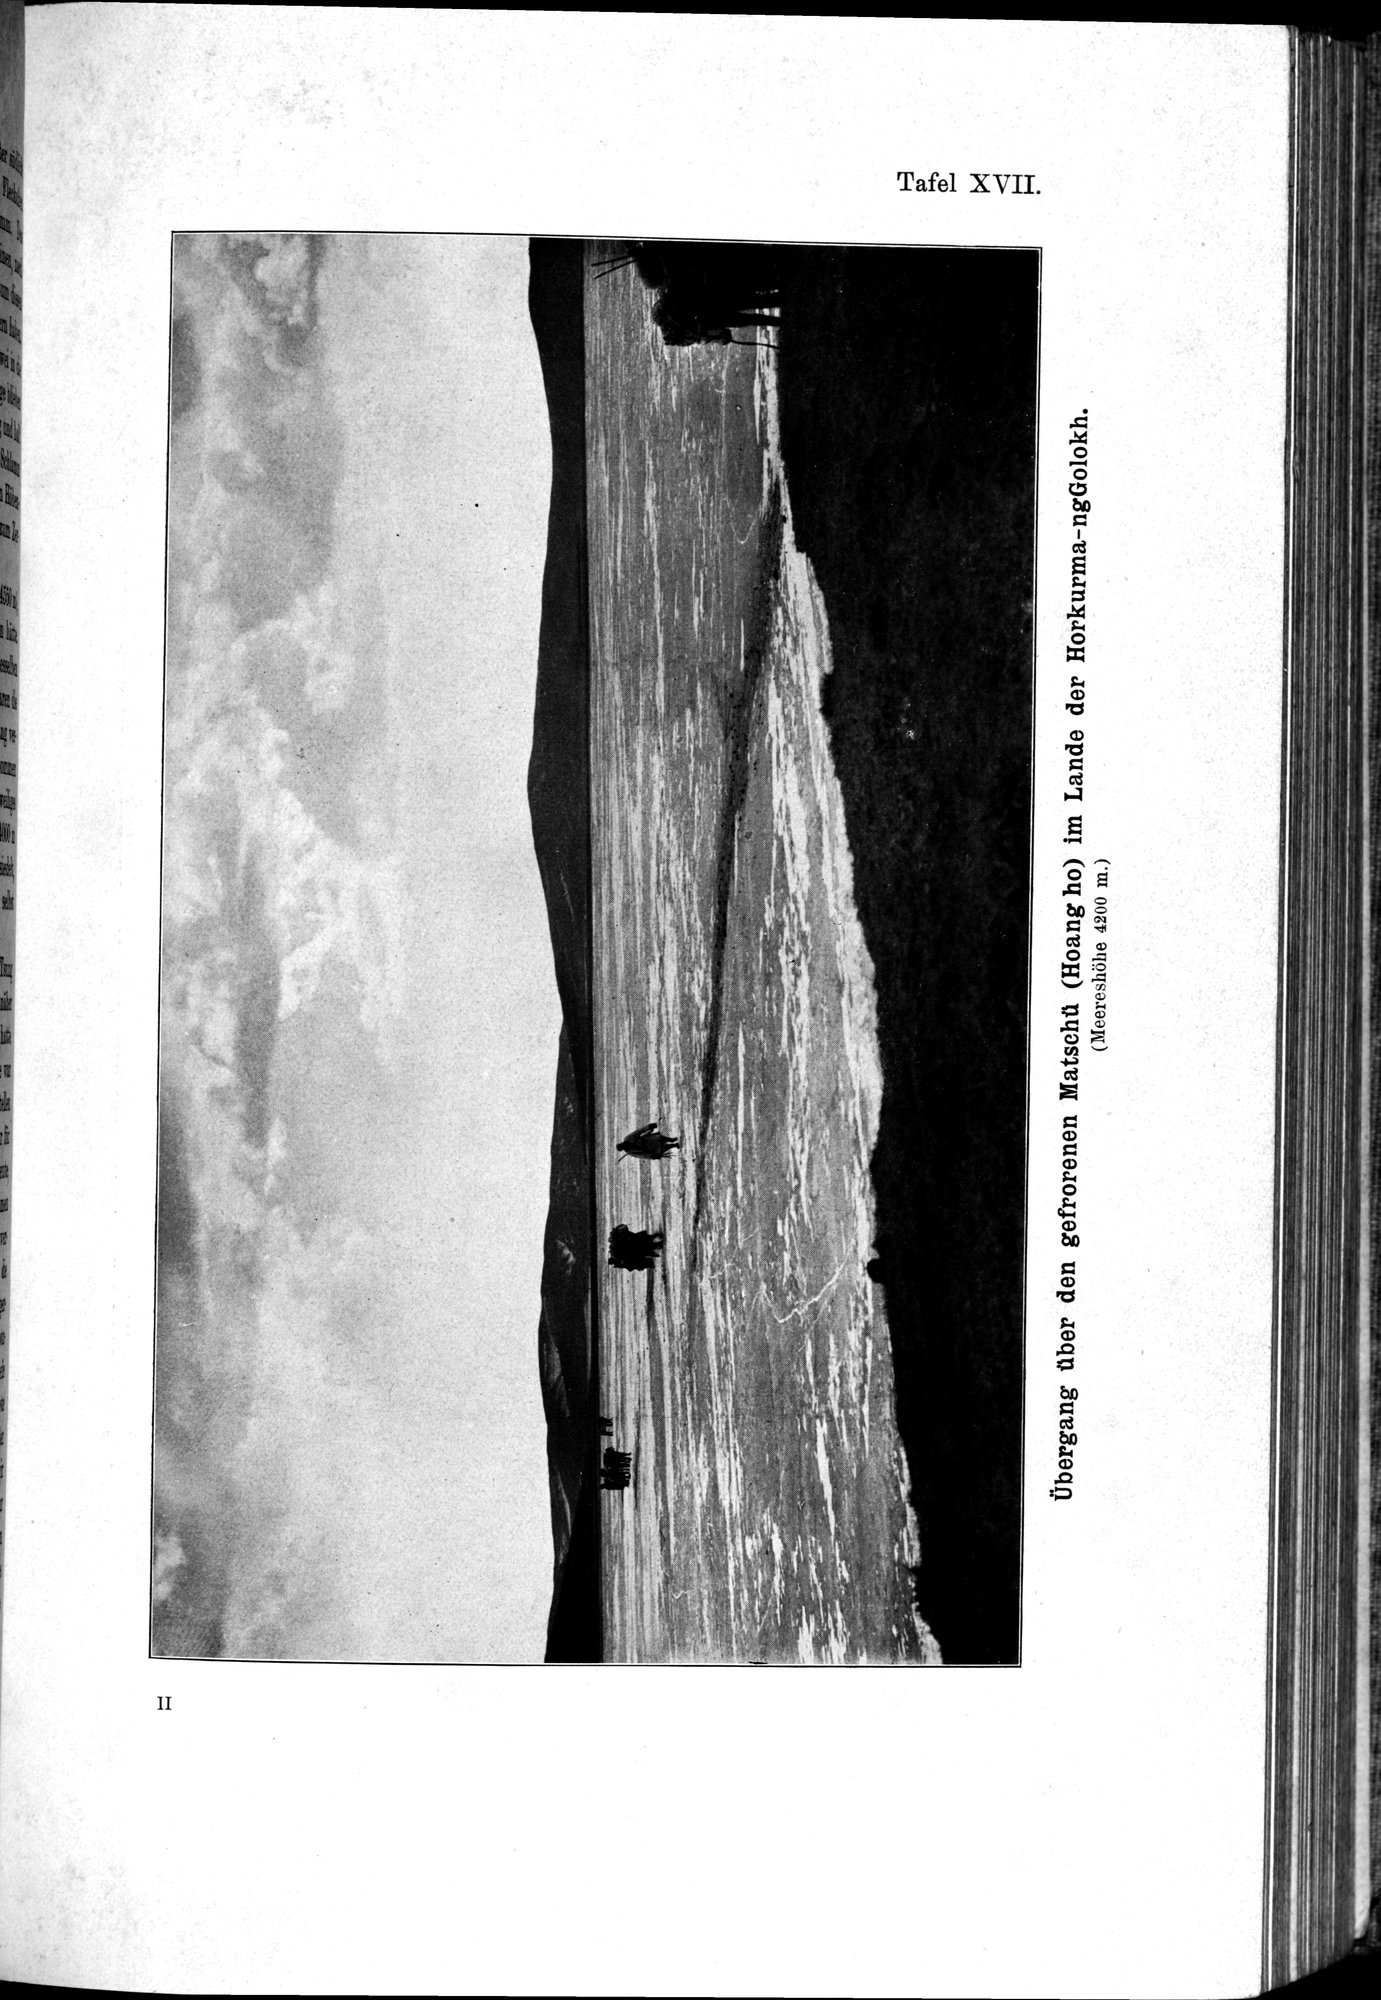 Meine Tibetreise : vol.2 / Page 131 (Grayscale High Resolution Image)